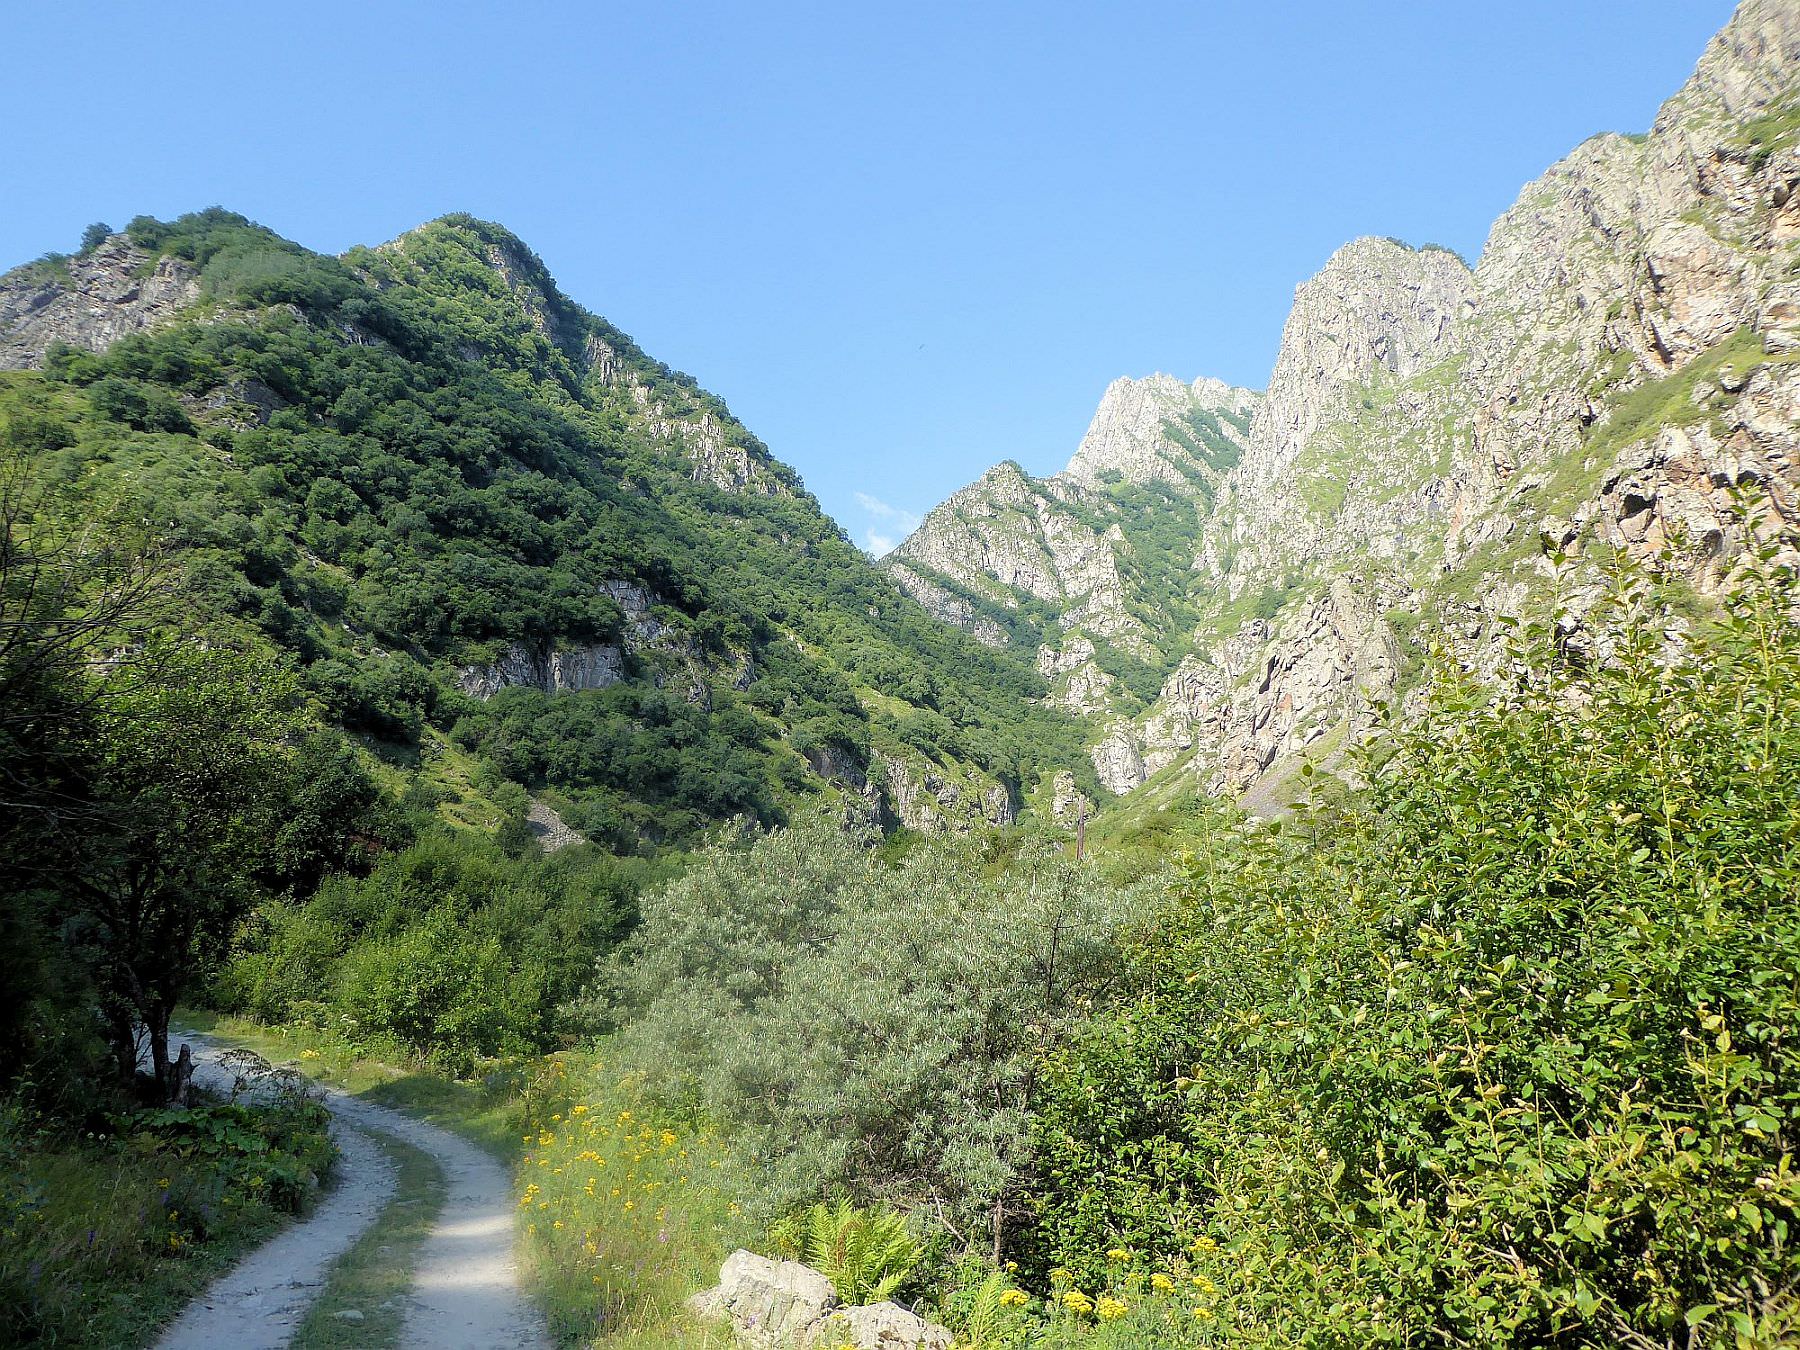 Into the Gveleti valley